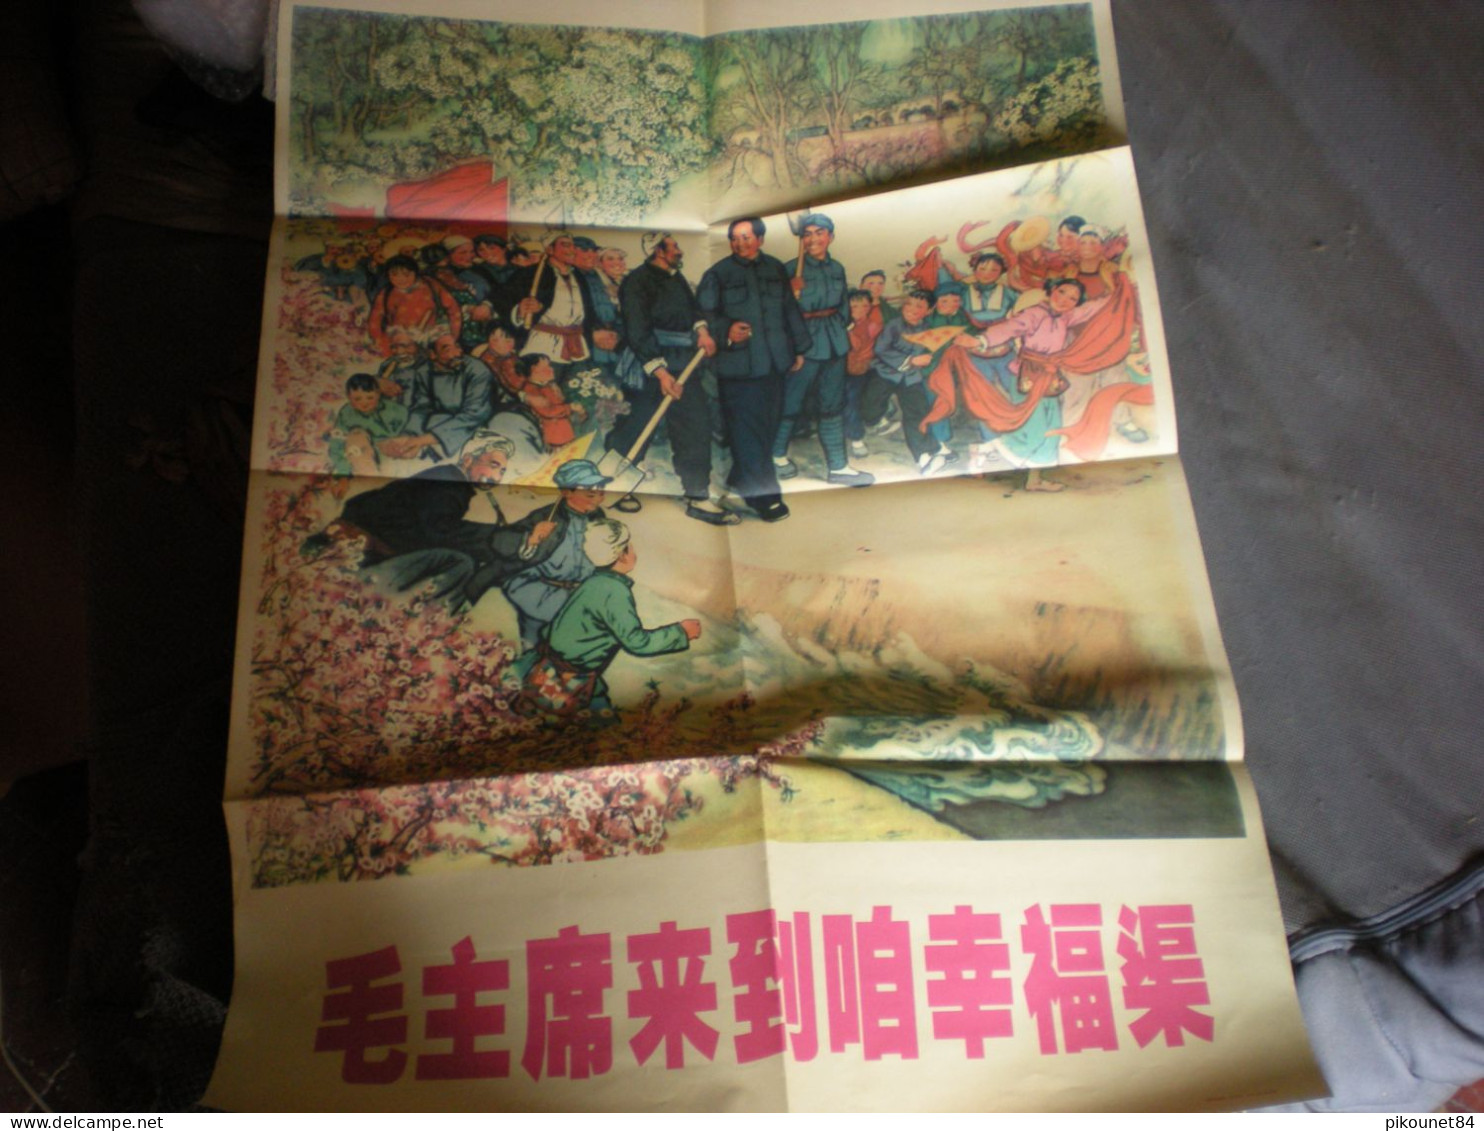 Affiche Originale Propagande Mao Années 60 - Plakate